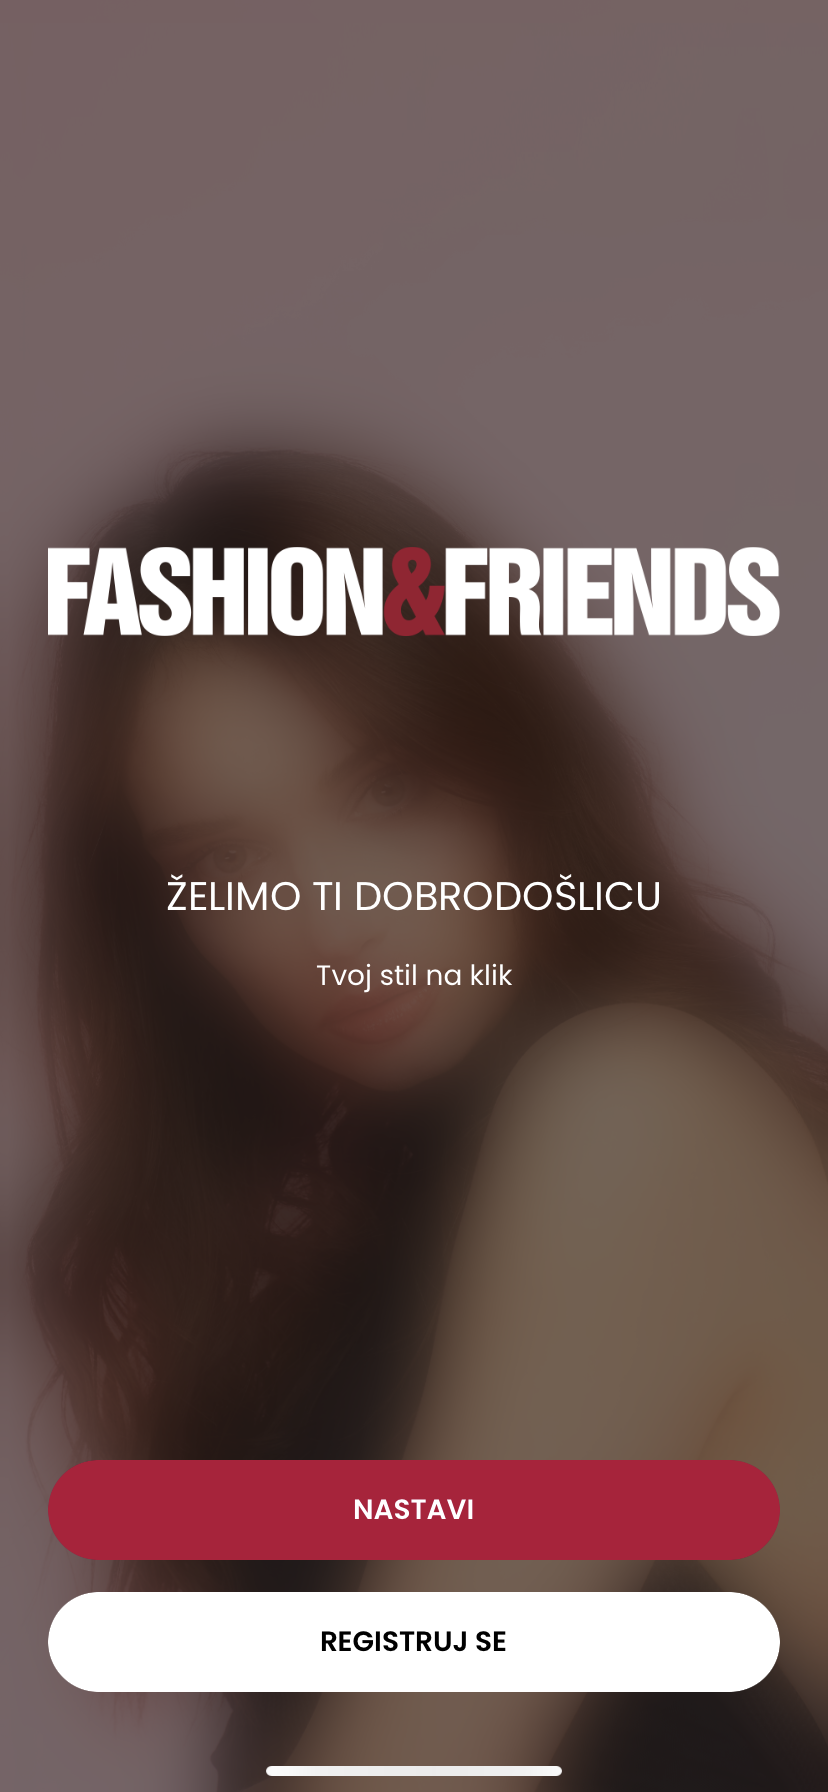 Fashion&Friends predstavlja novu shopping i loyalty aplikaciju